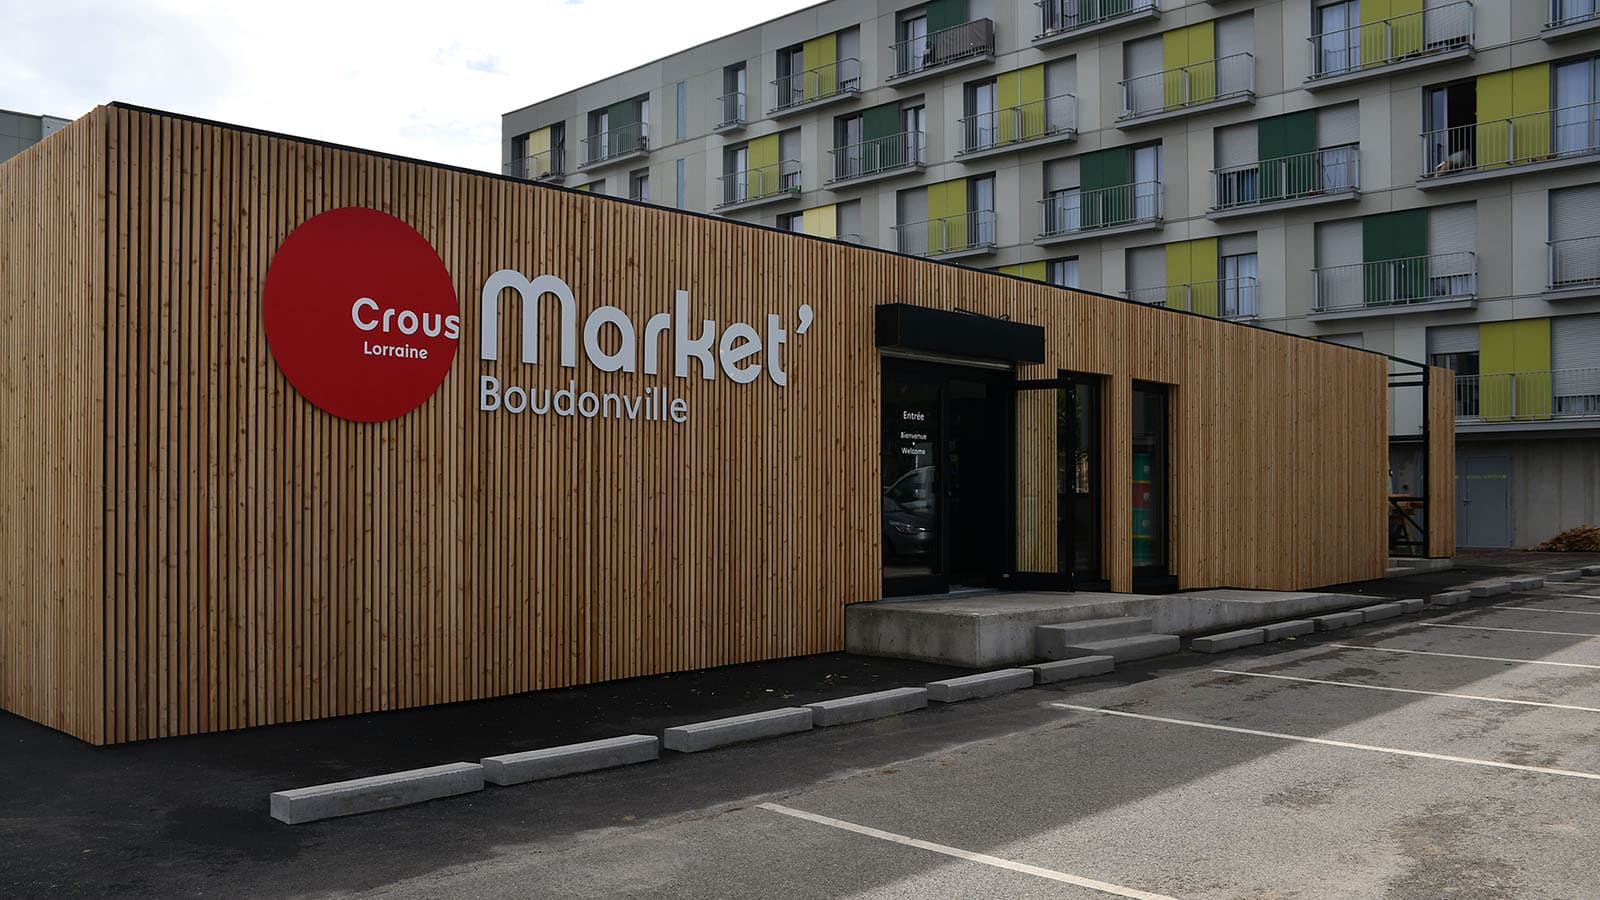 Market' Boudonville